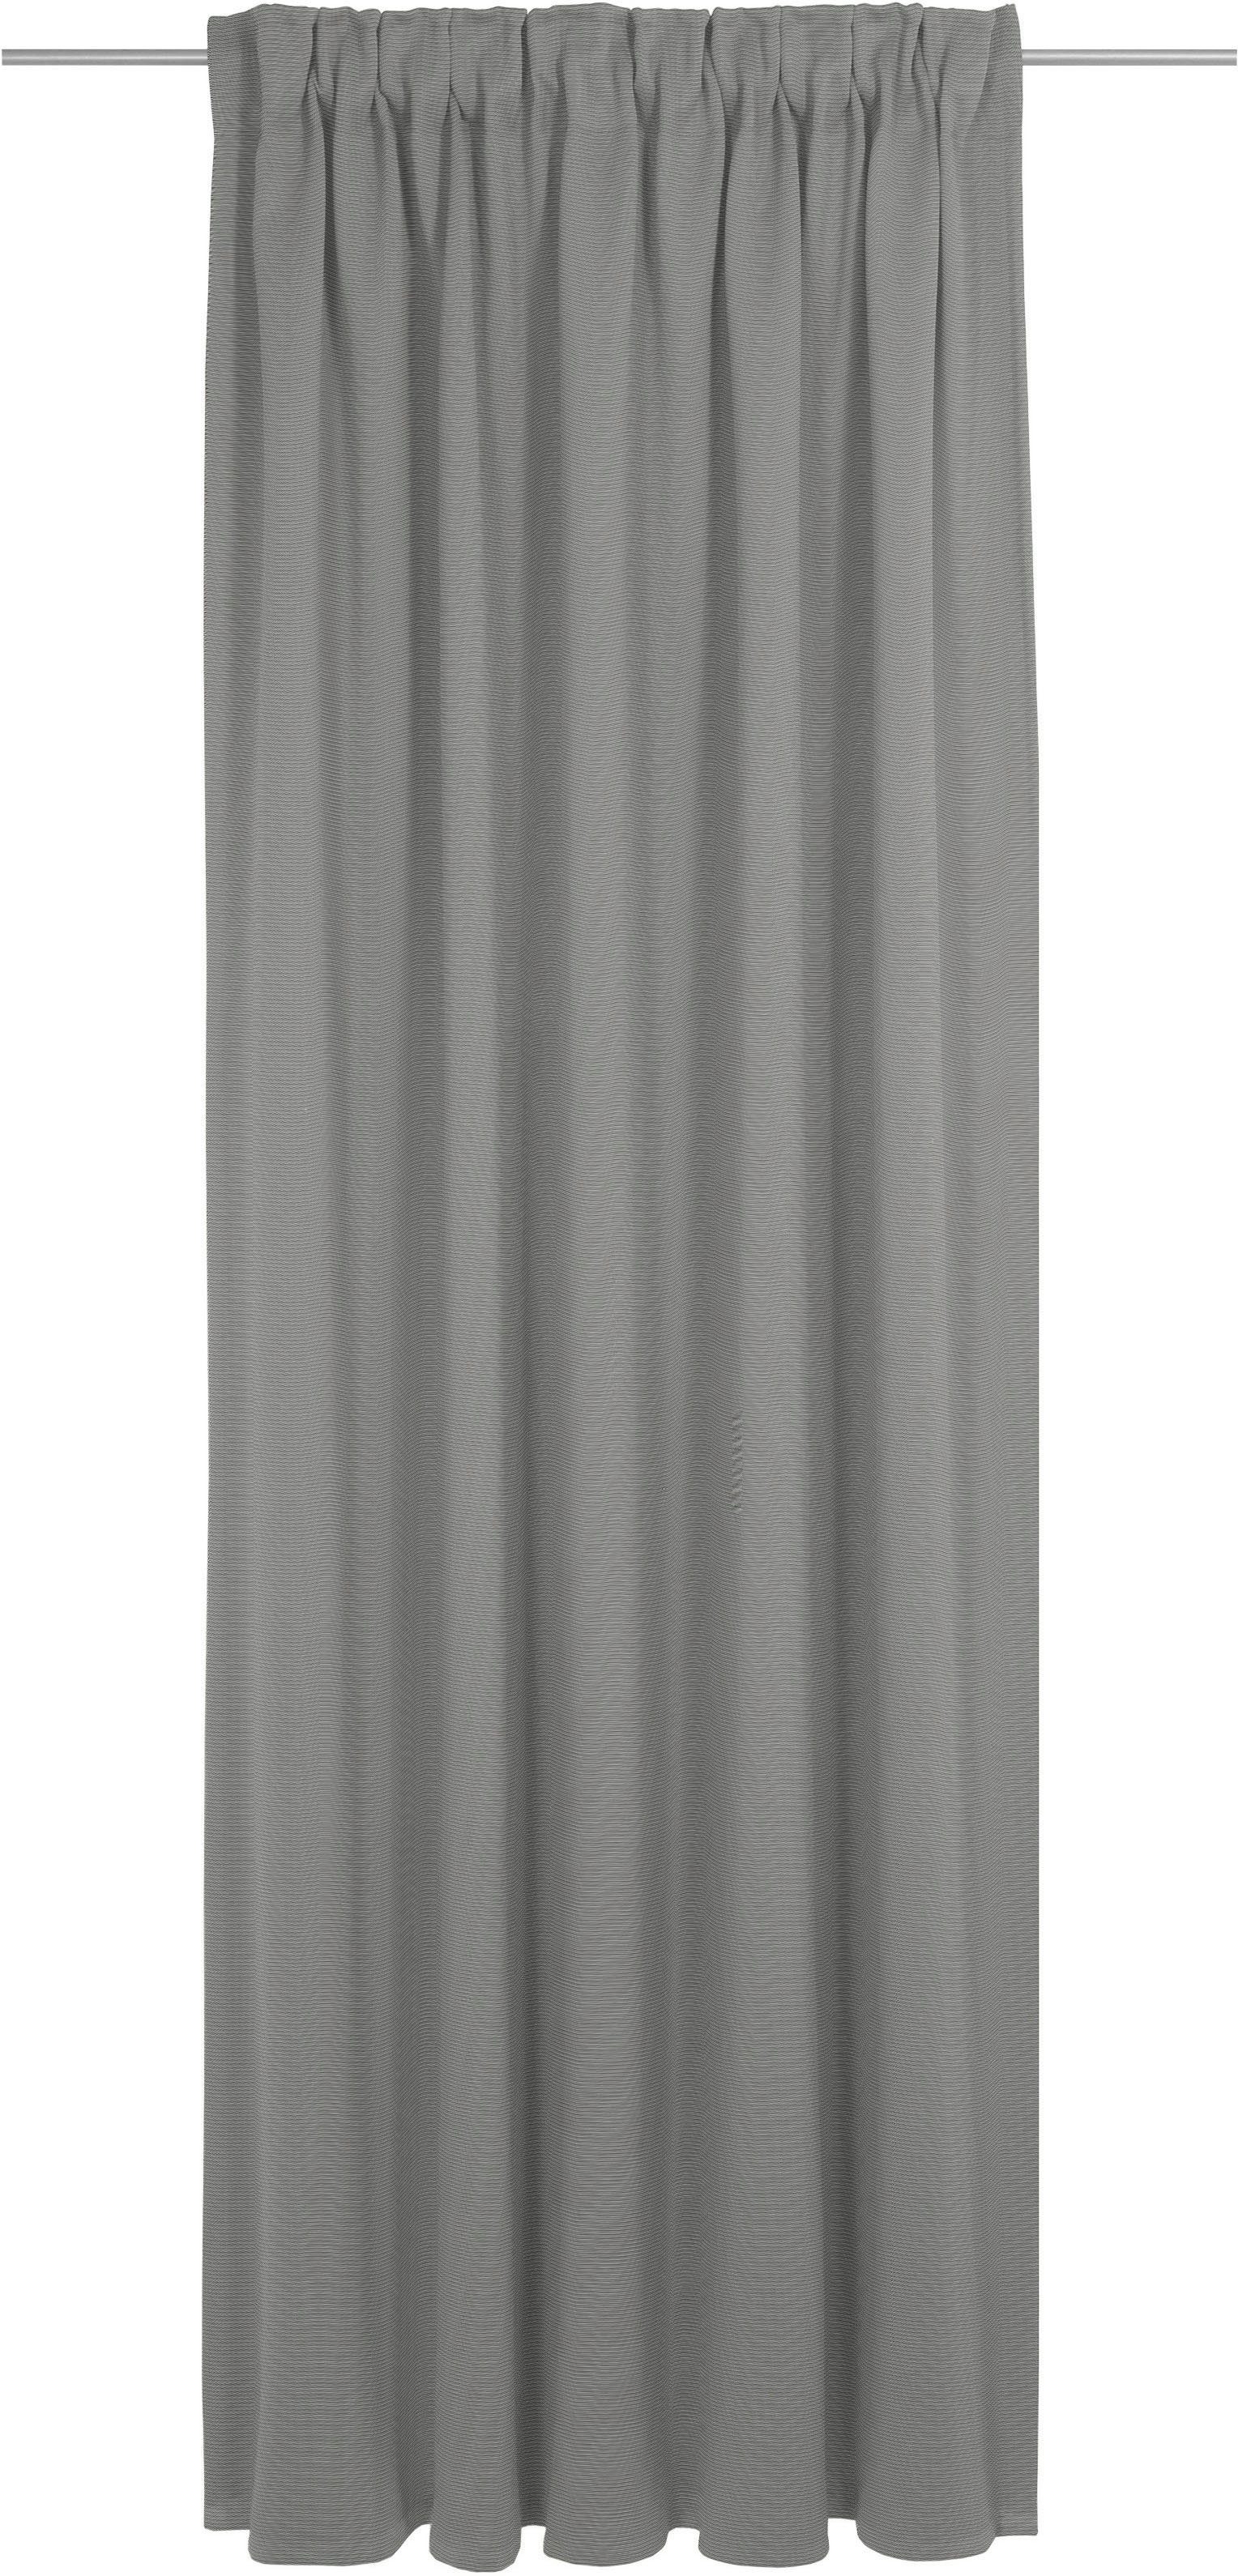 Vorhang Uni Collection light, Wirth, Multifunktionsband (1 St), blickdicht, nach Maß dunkelgrau | Fertiggardinen